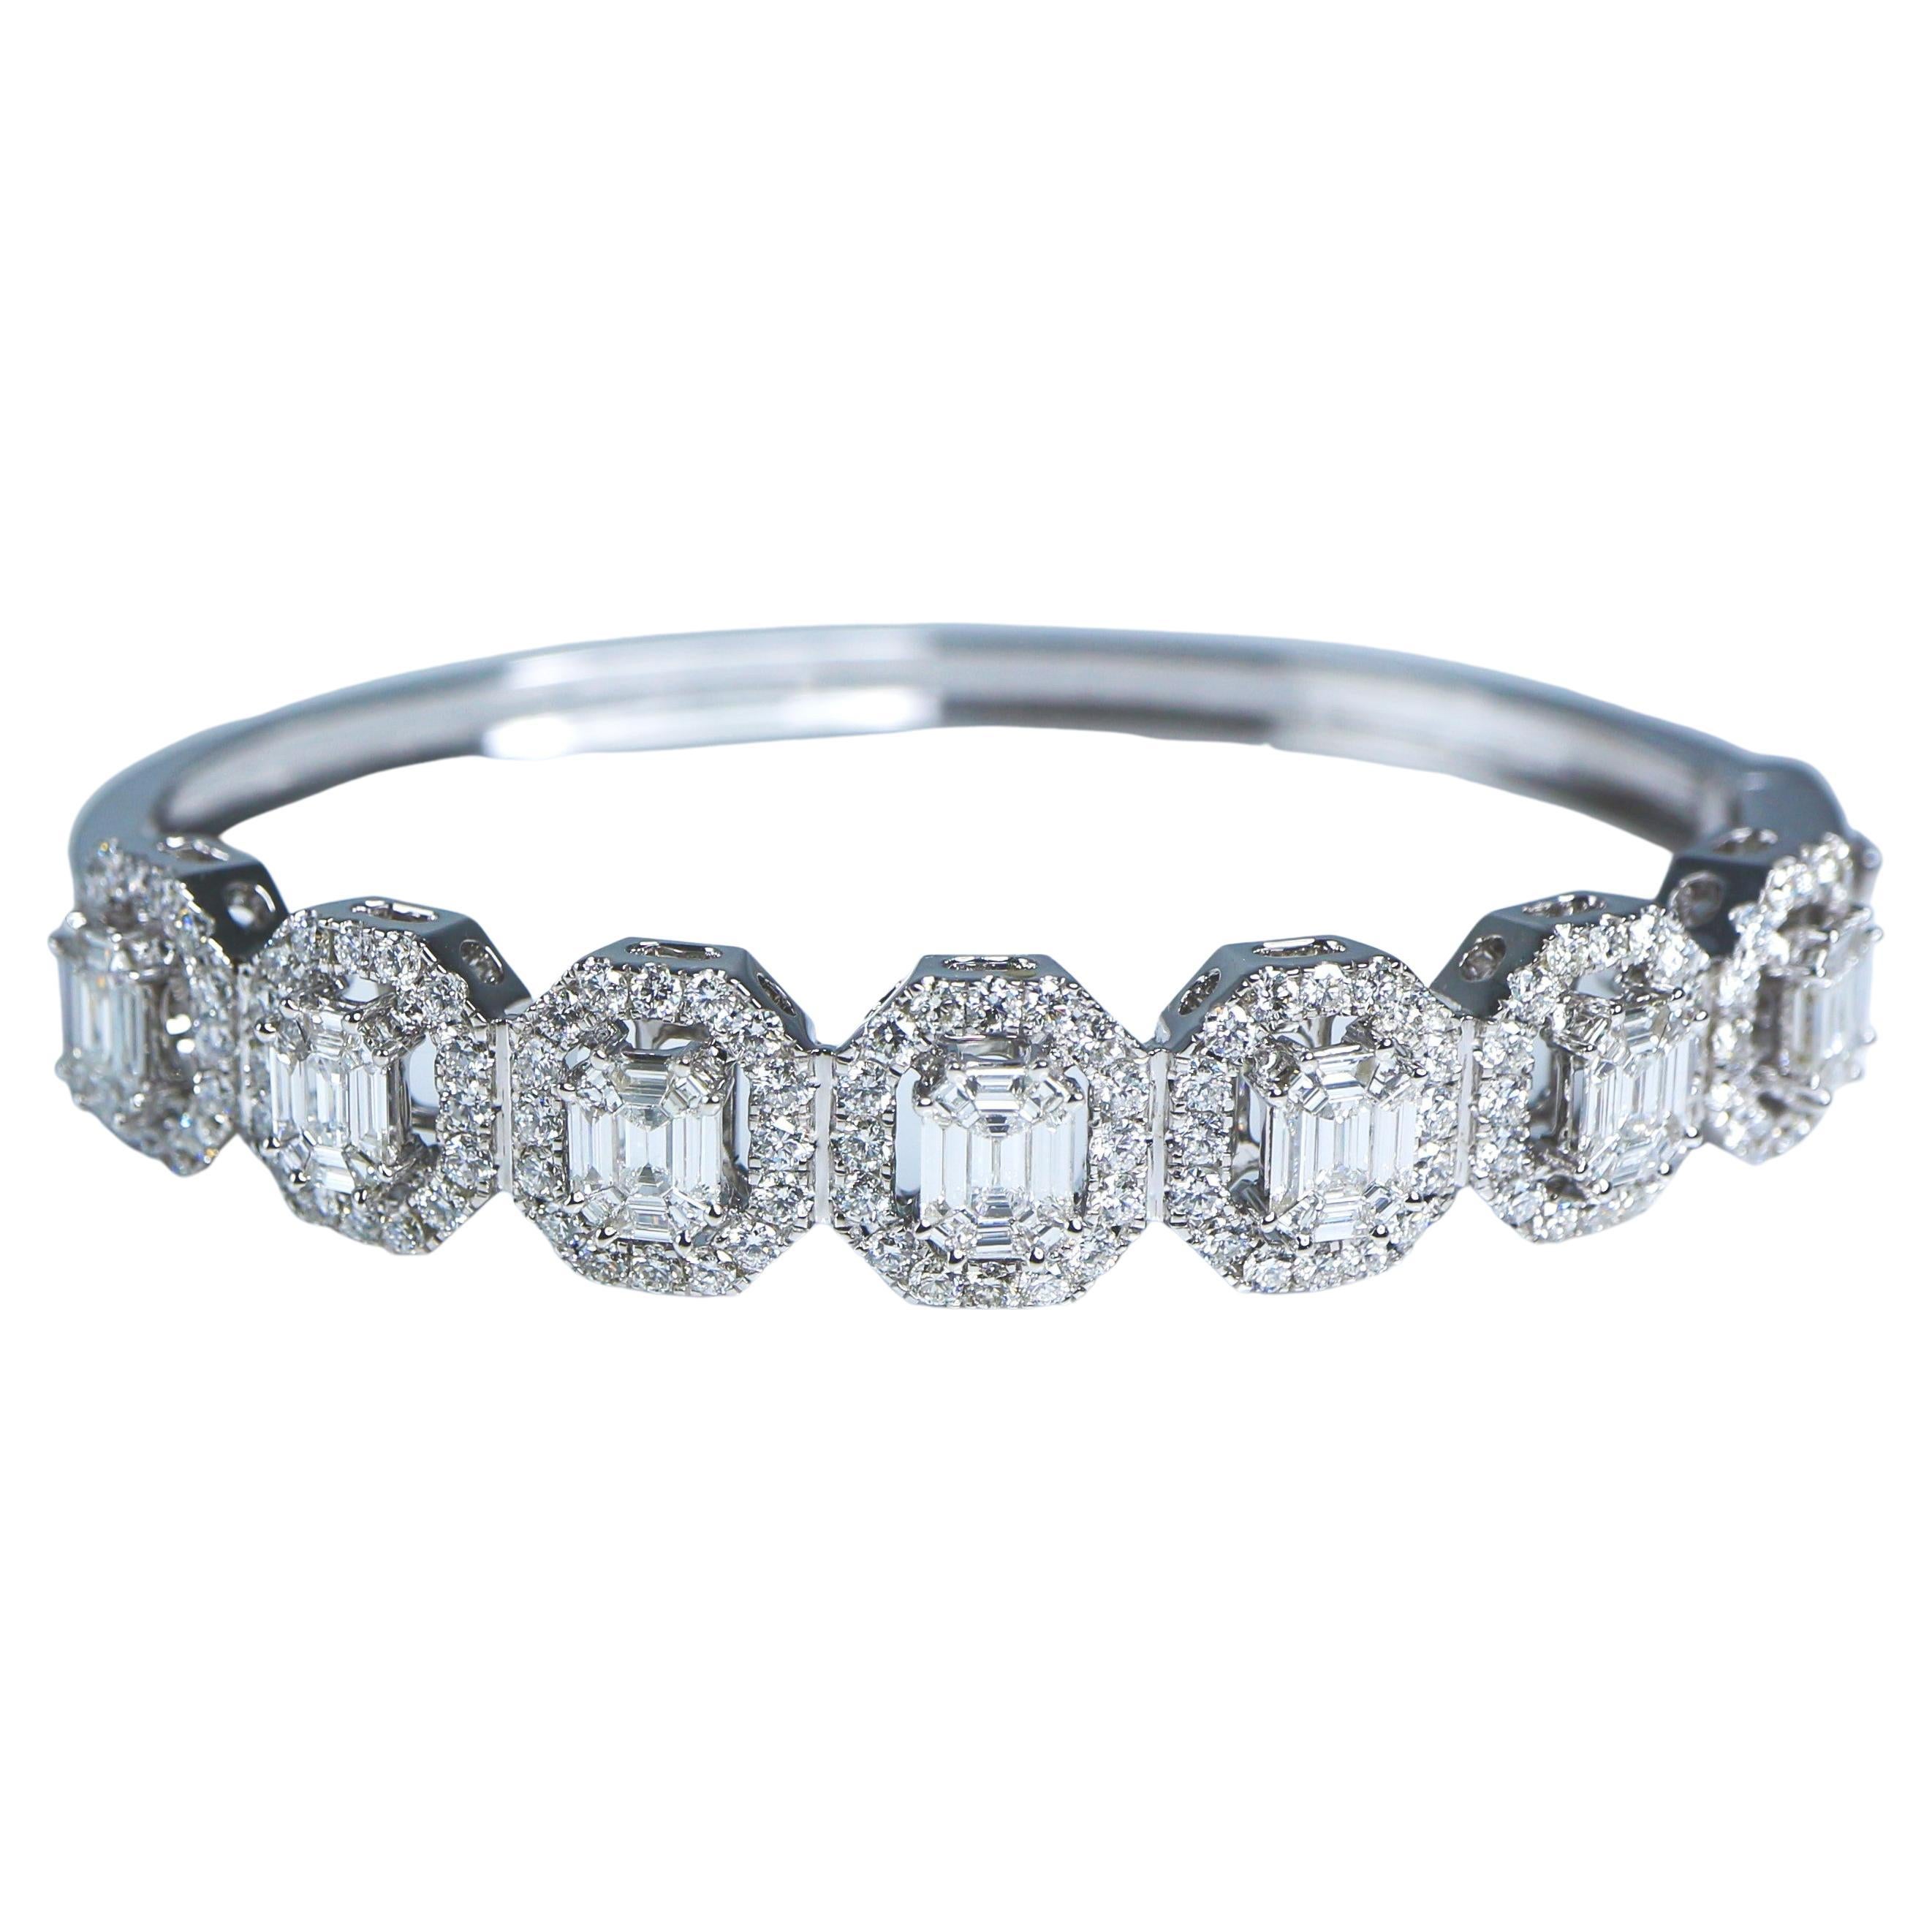 IGI 14k 3.92 Carat Diamond Antique Art Deco Bangle Bracelet For Sale